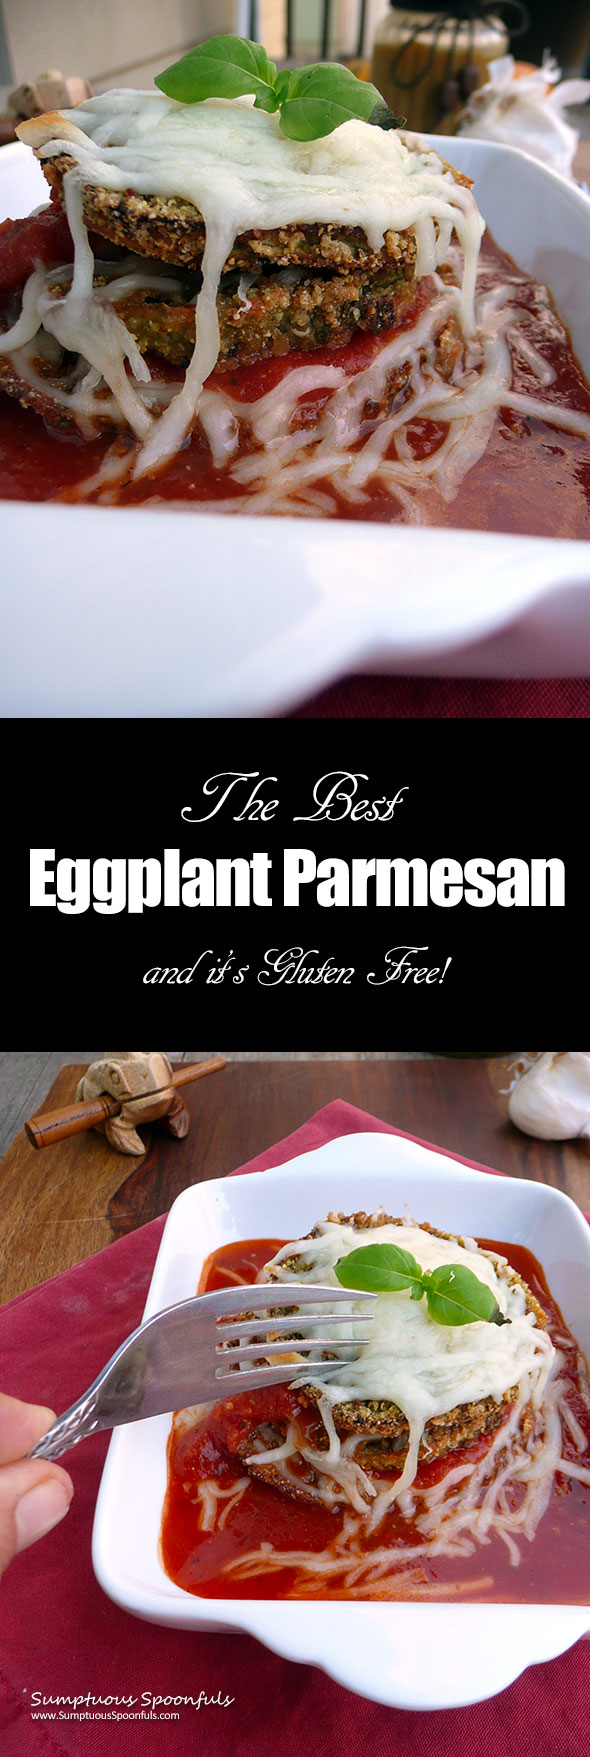 The BEST Eggplant Parmesan (gluten free) ~ Sumptuous Spoonfuls #GF #Eggplant #Parmegiana #